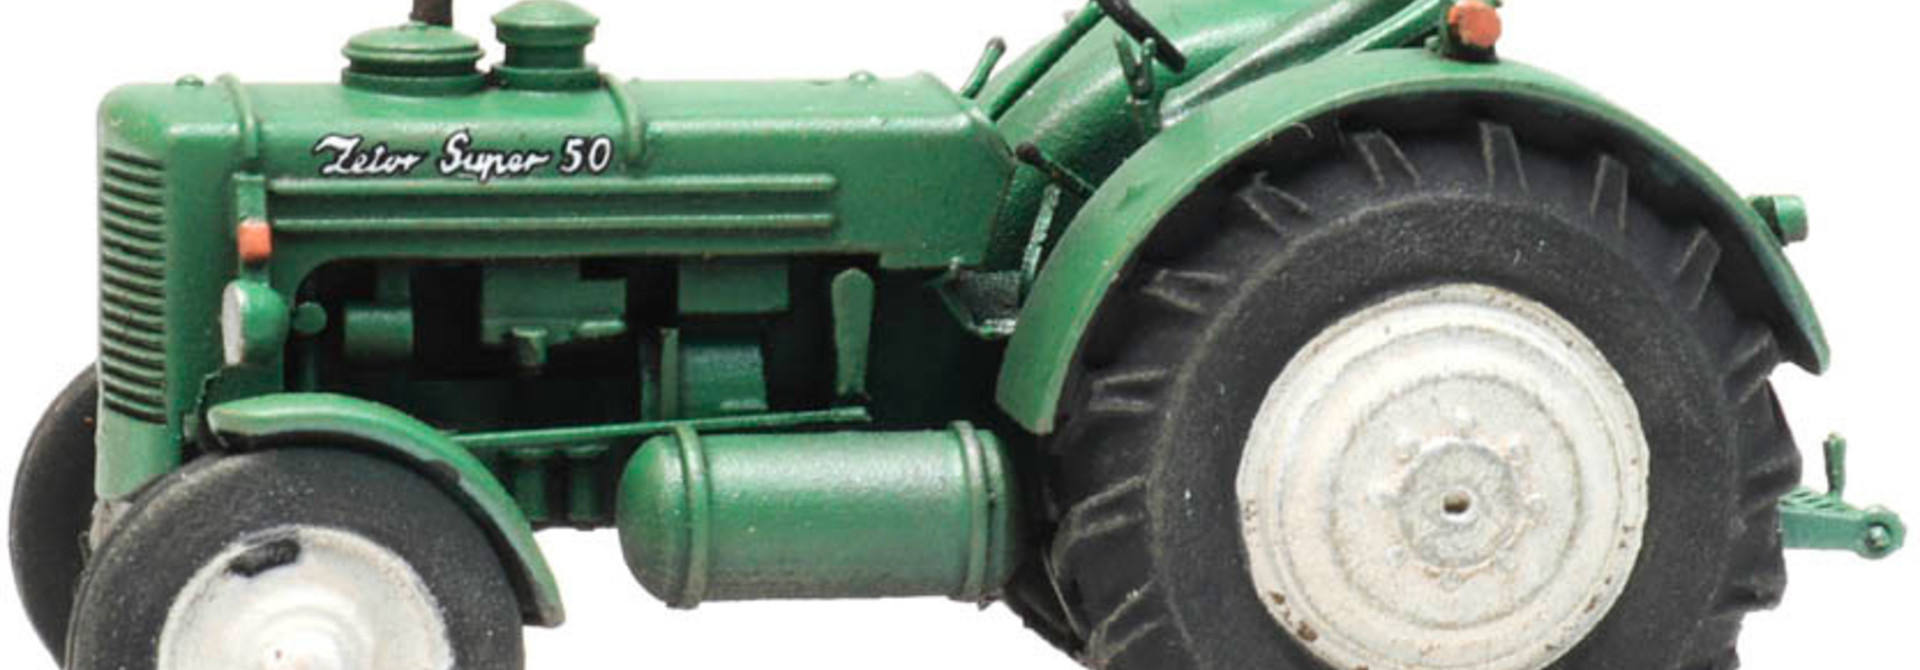 387.420 Zetor Super 50 traktor